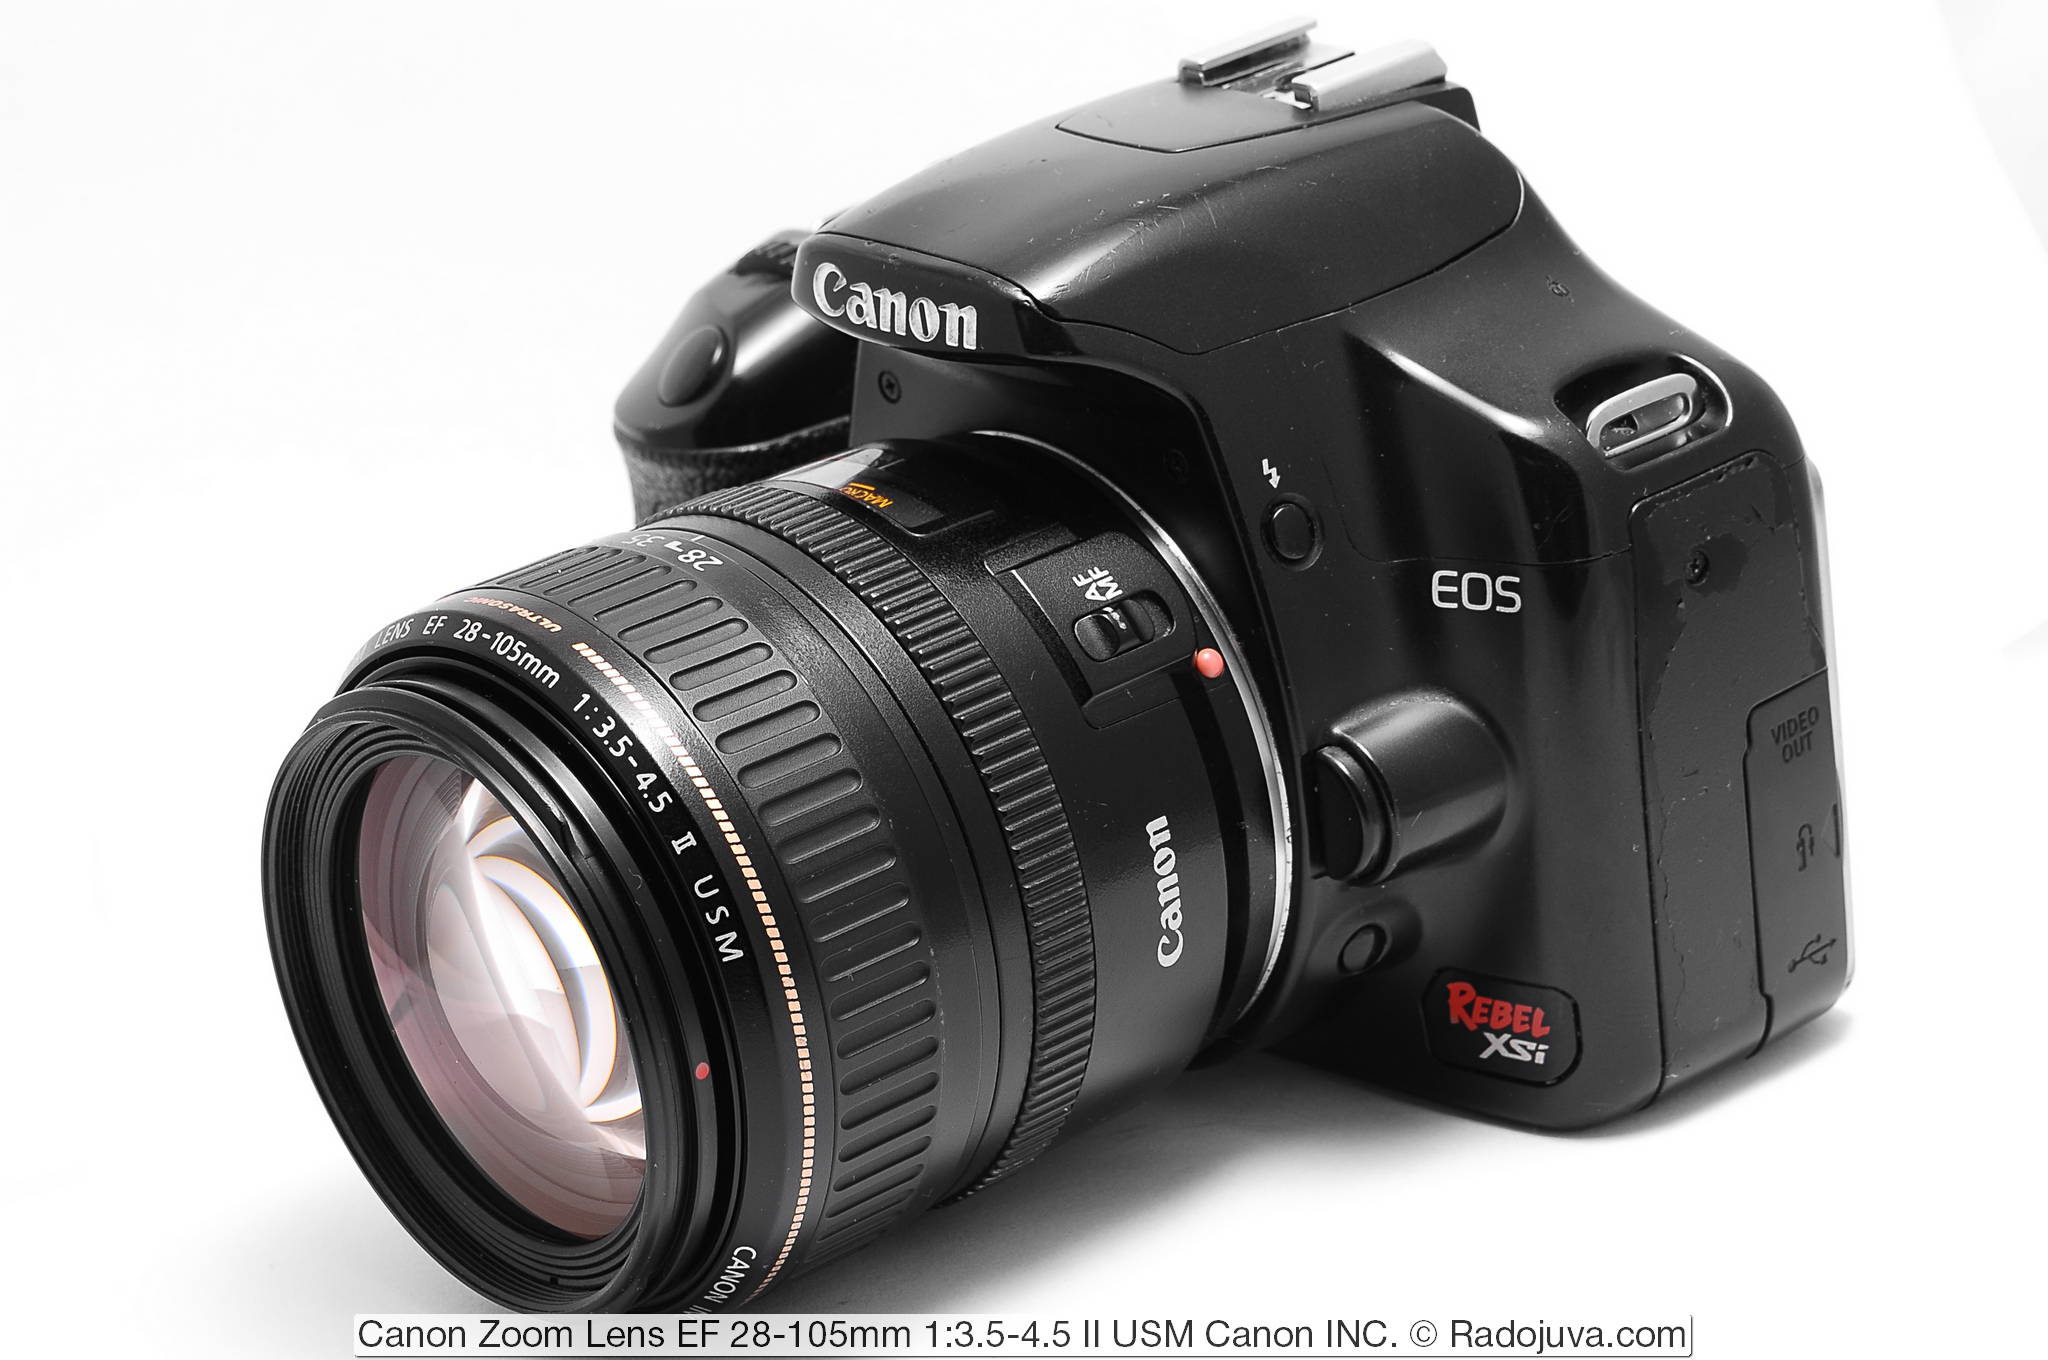 Canon Zoom Lens EF 28-105mm 1:3.5-4.5 II USM Canon INC.